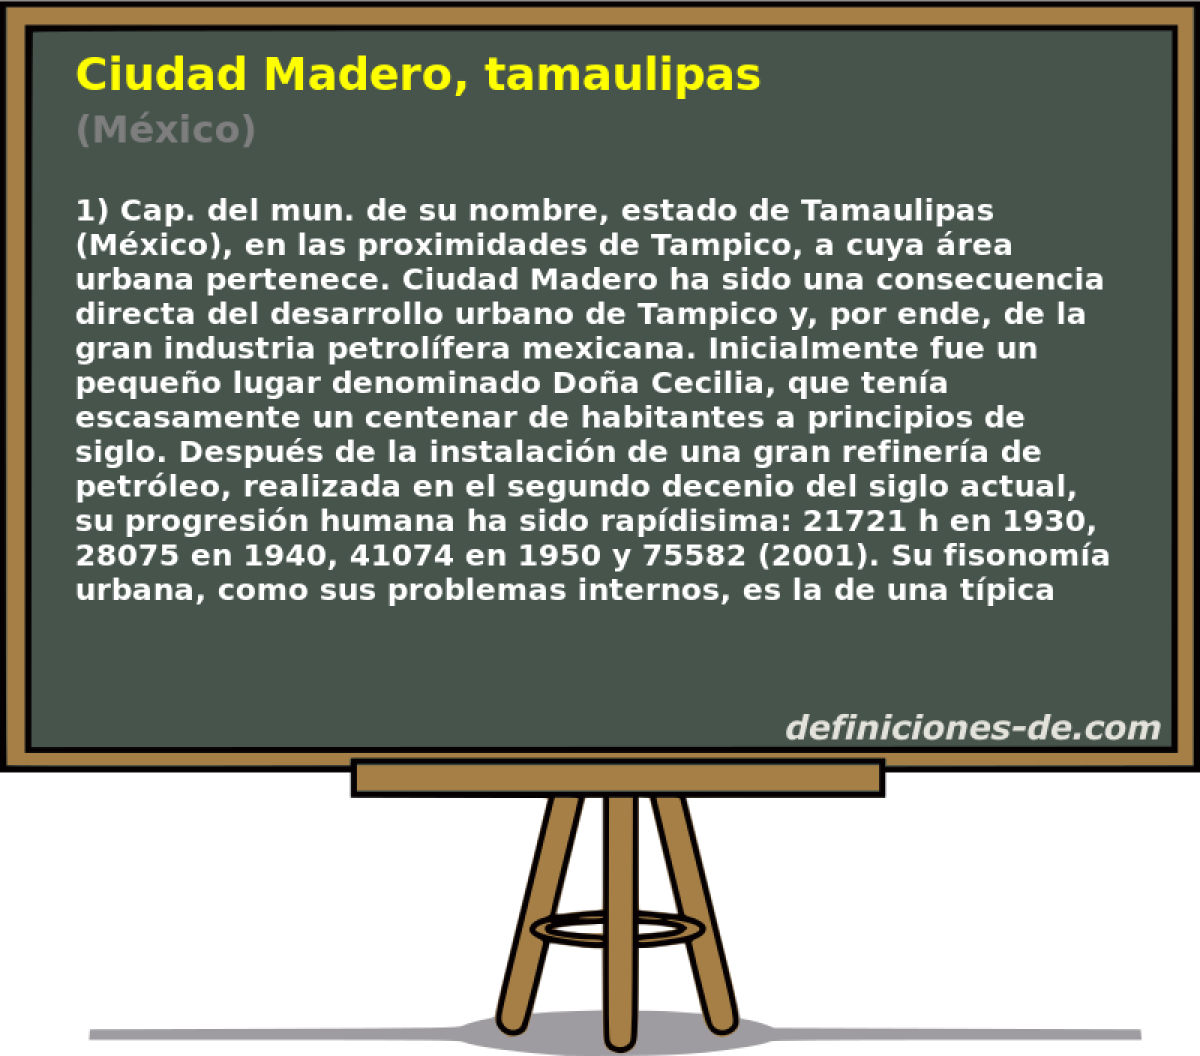 Ciudad Madero, tamaulipas (Mxico)